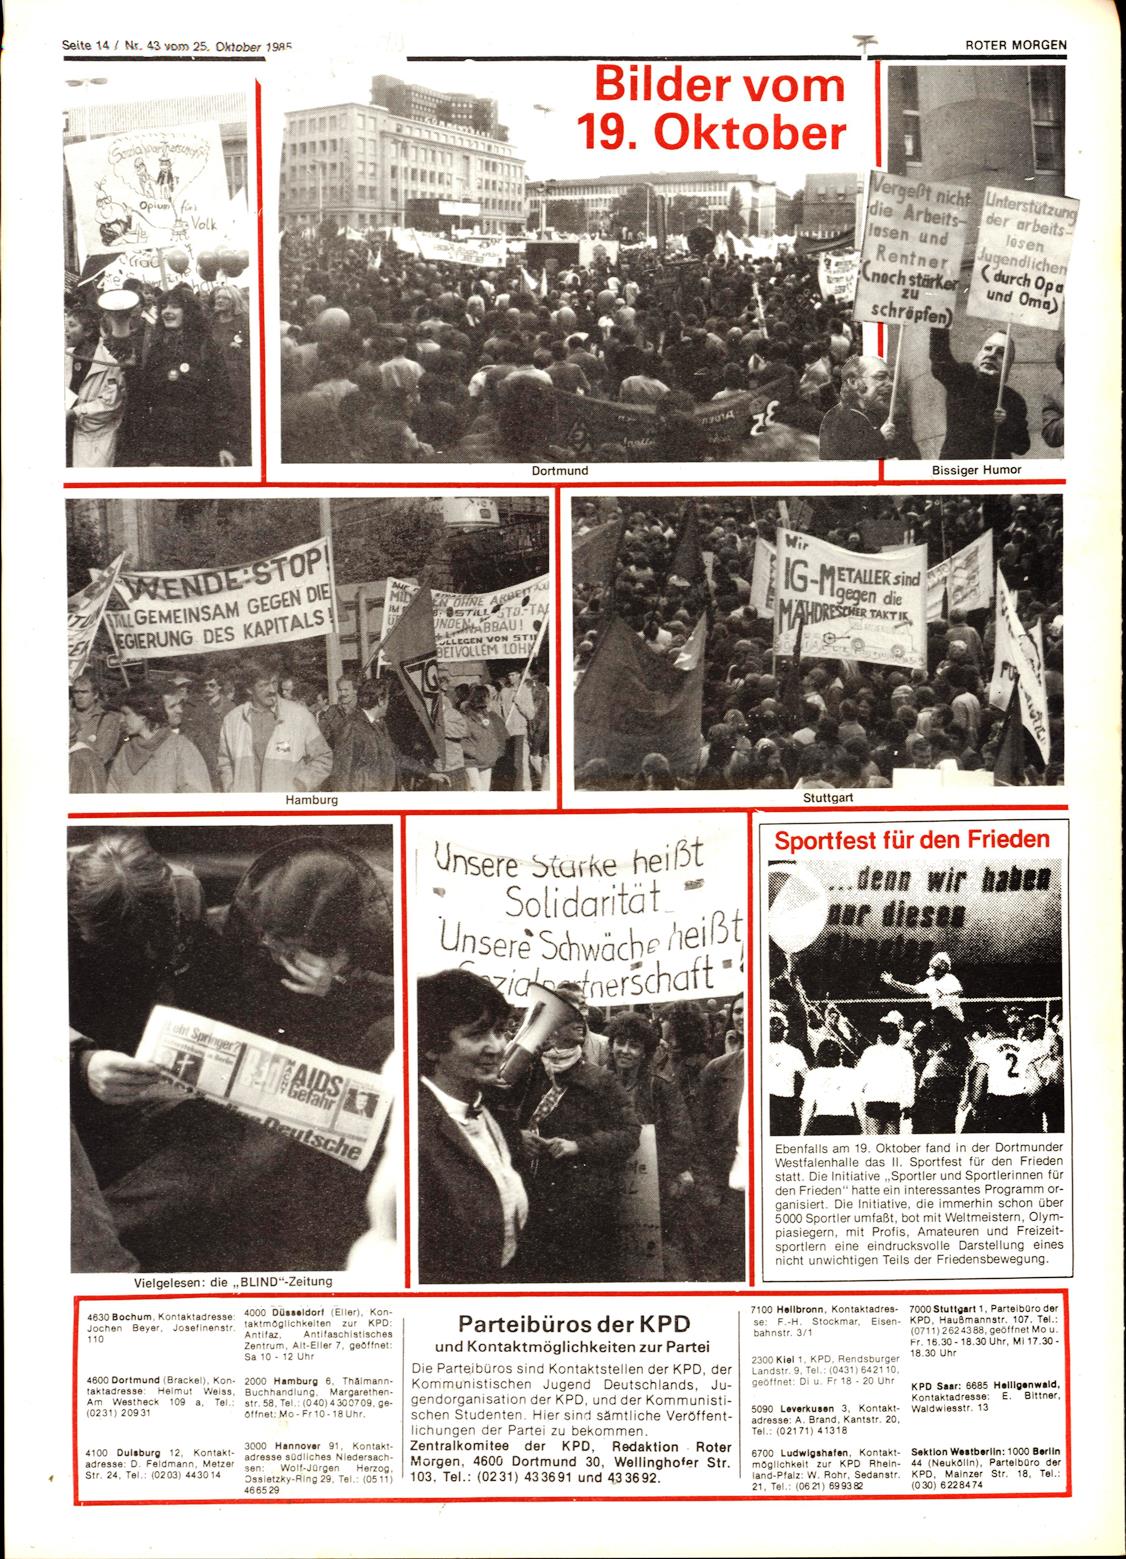 Roter Morgen, 19. Jg., 25. Oktober 1985, Nr. 43, Seite 14